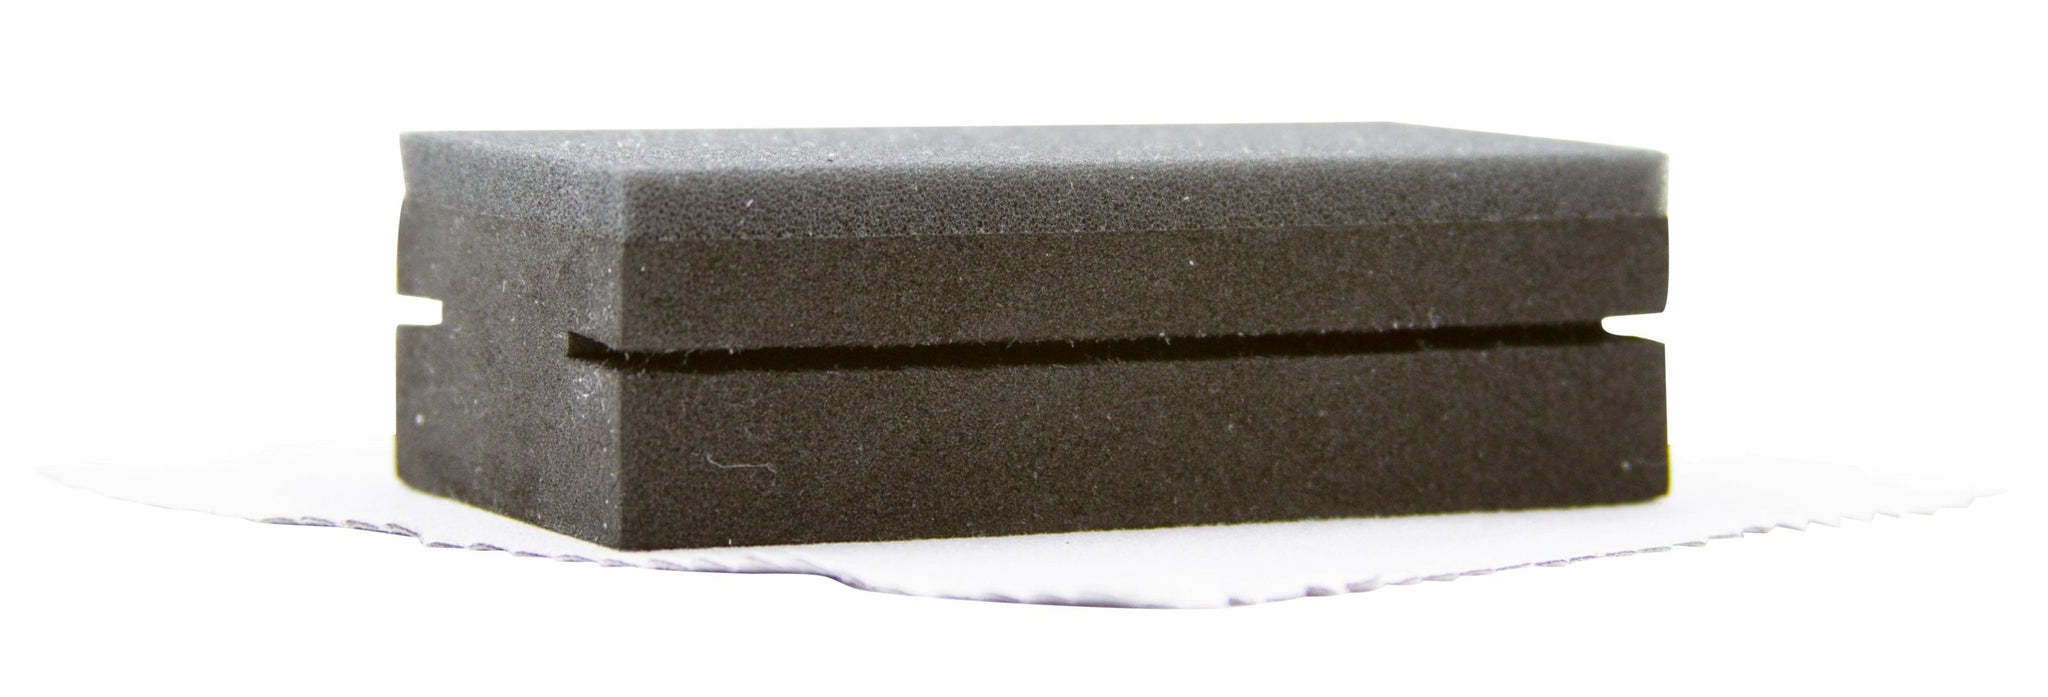 Ceramic coating foam block with microfiber cloth